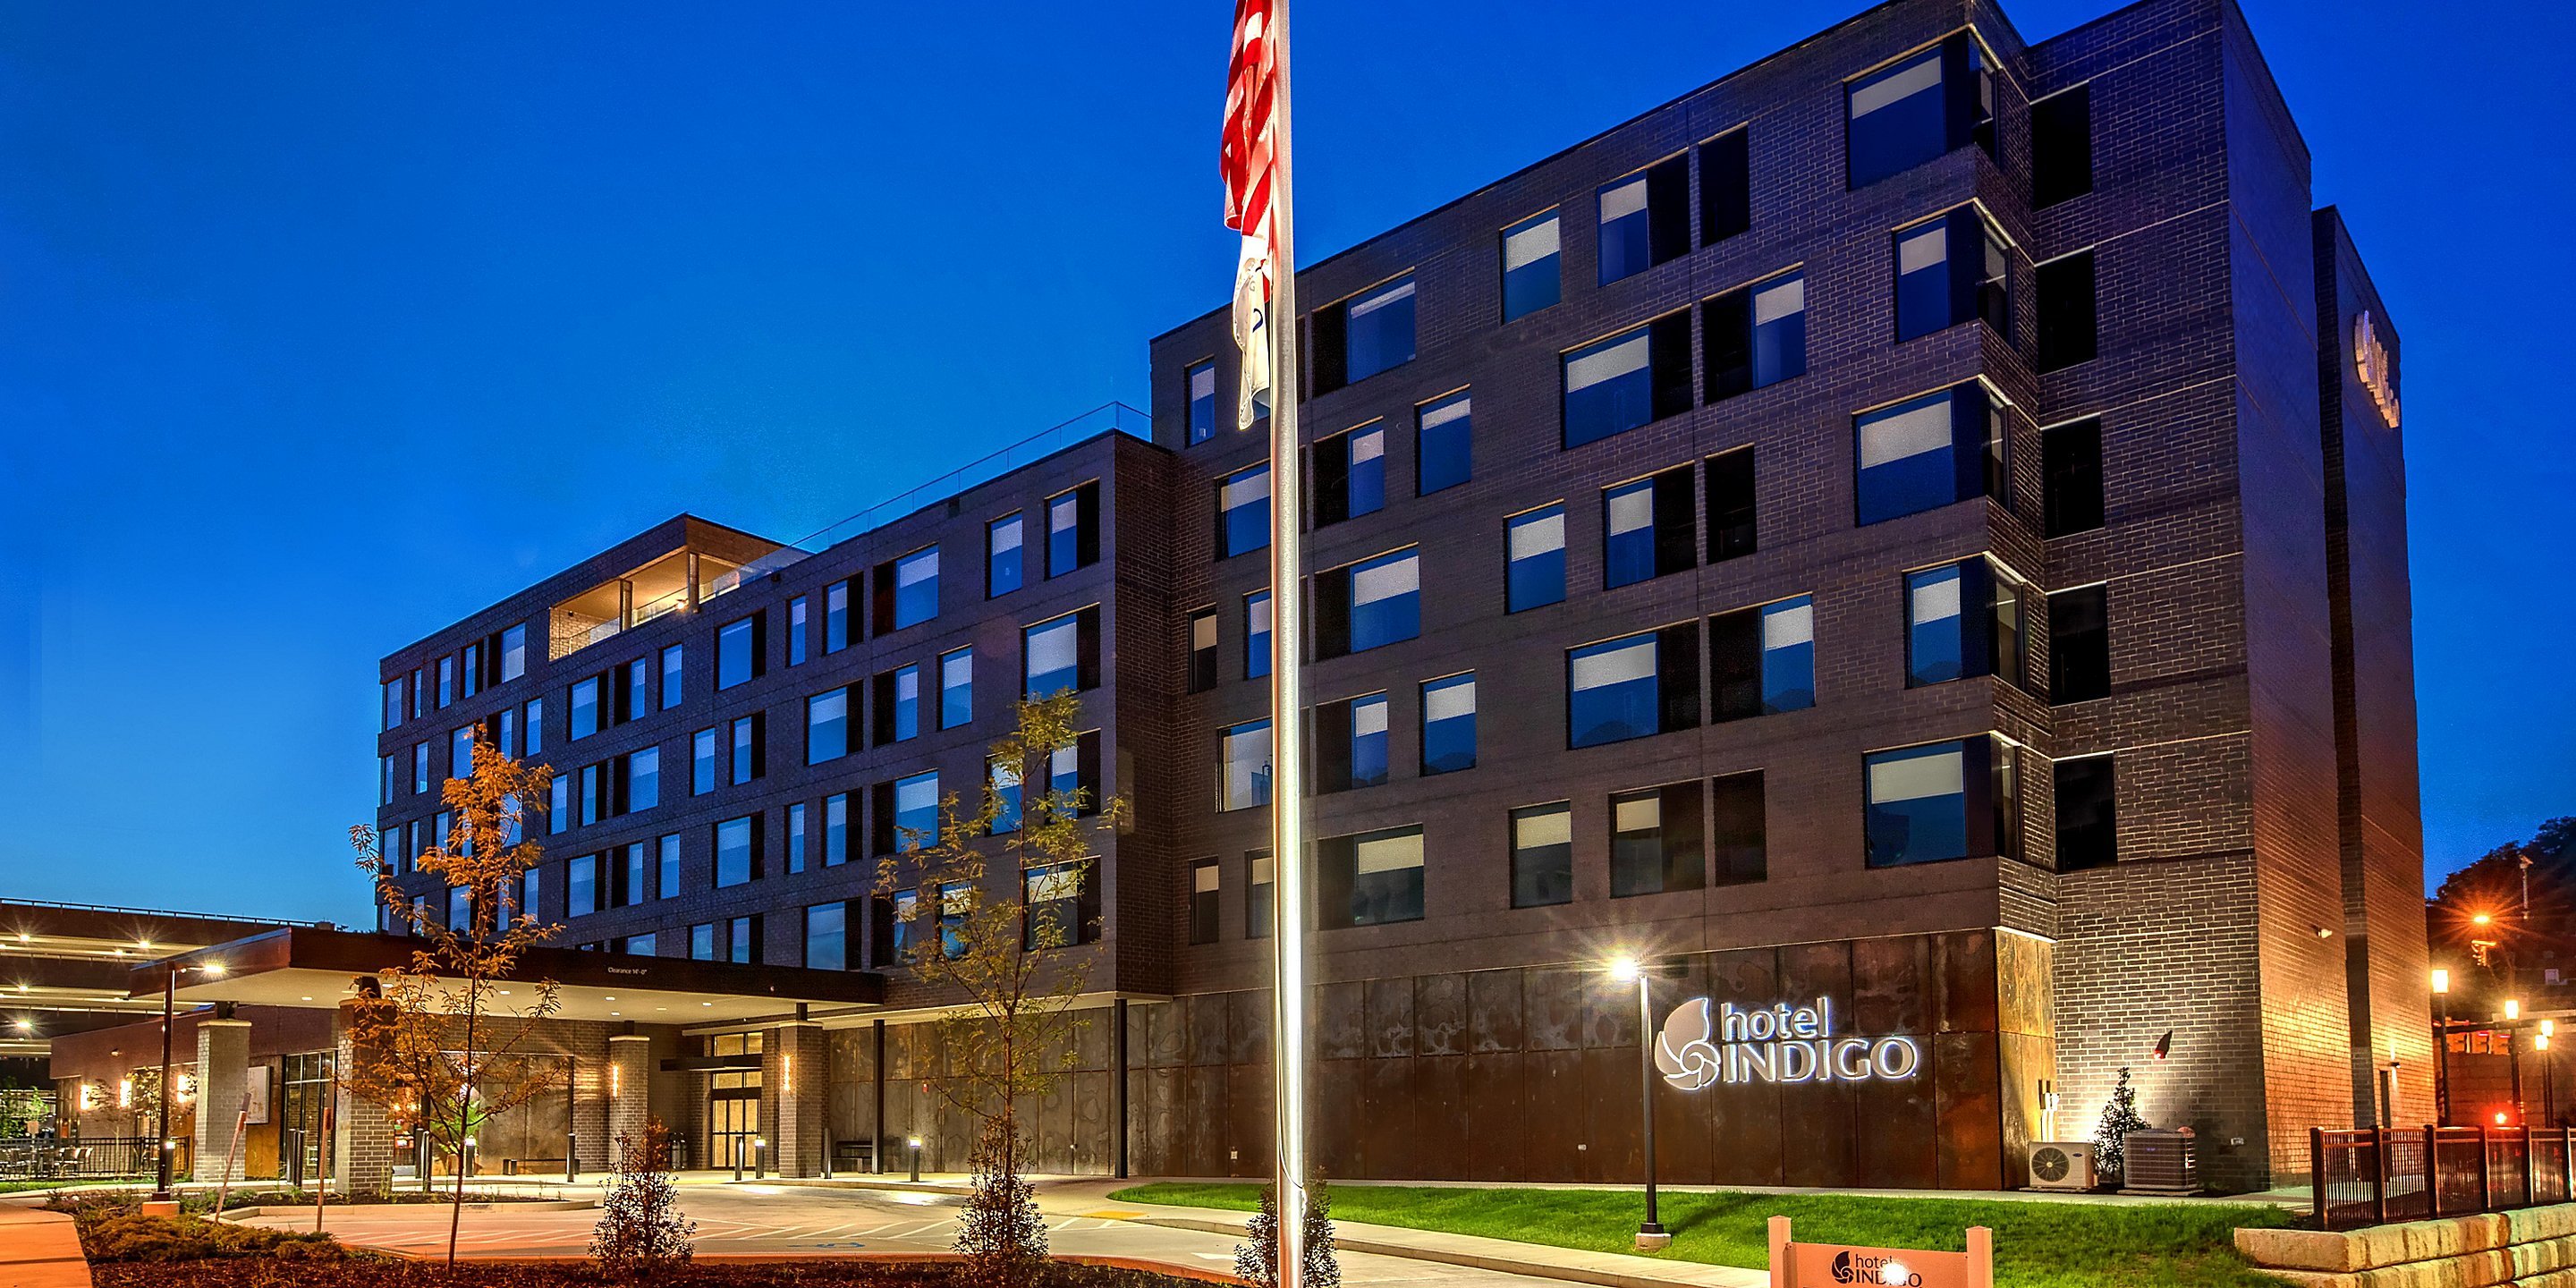 Photo of Hotel Indigo Pittsburgh University/Oakland, Pittsburgh, PA